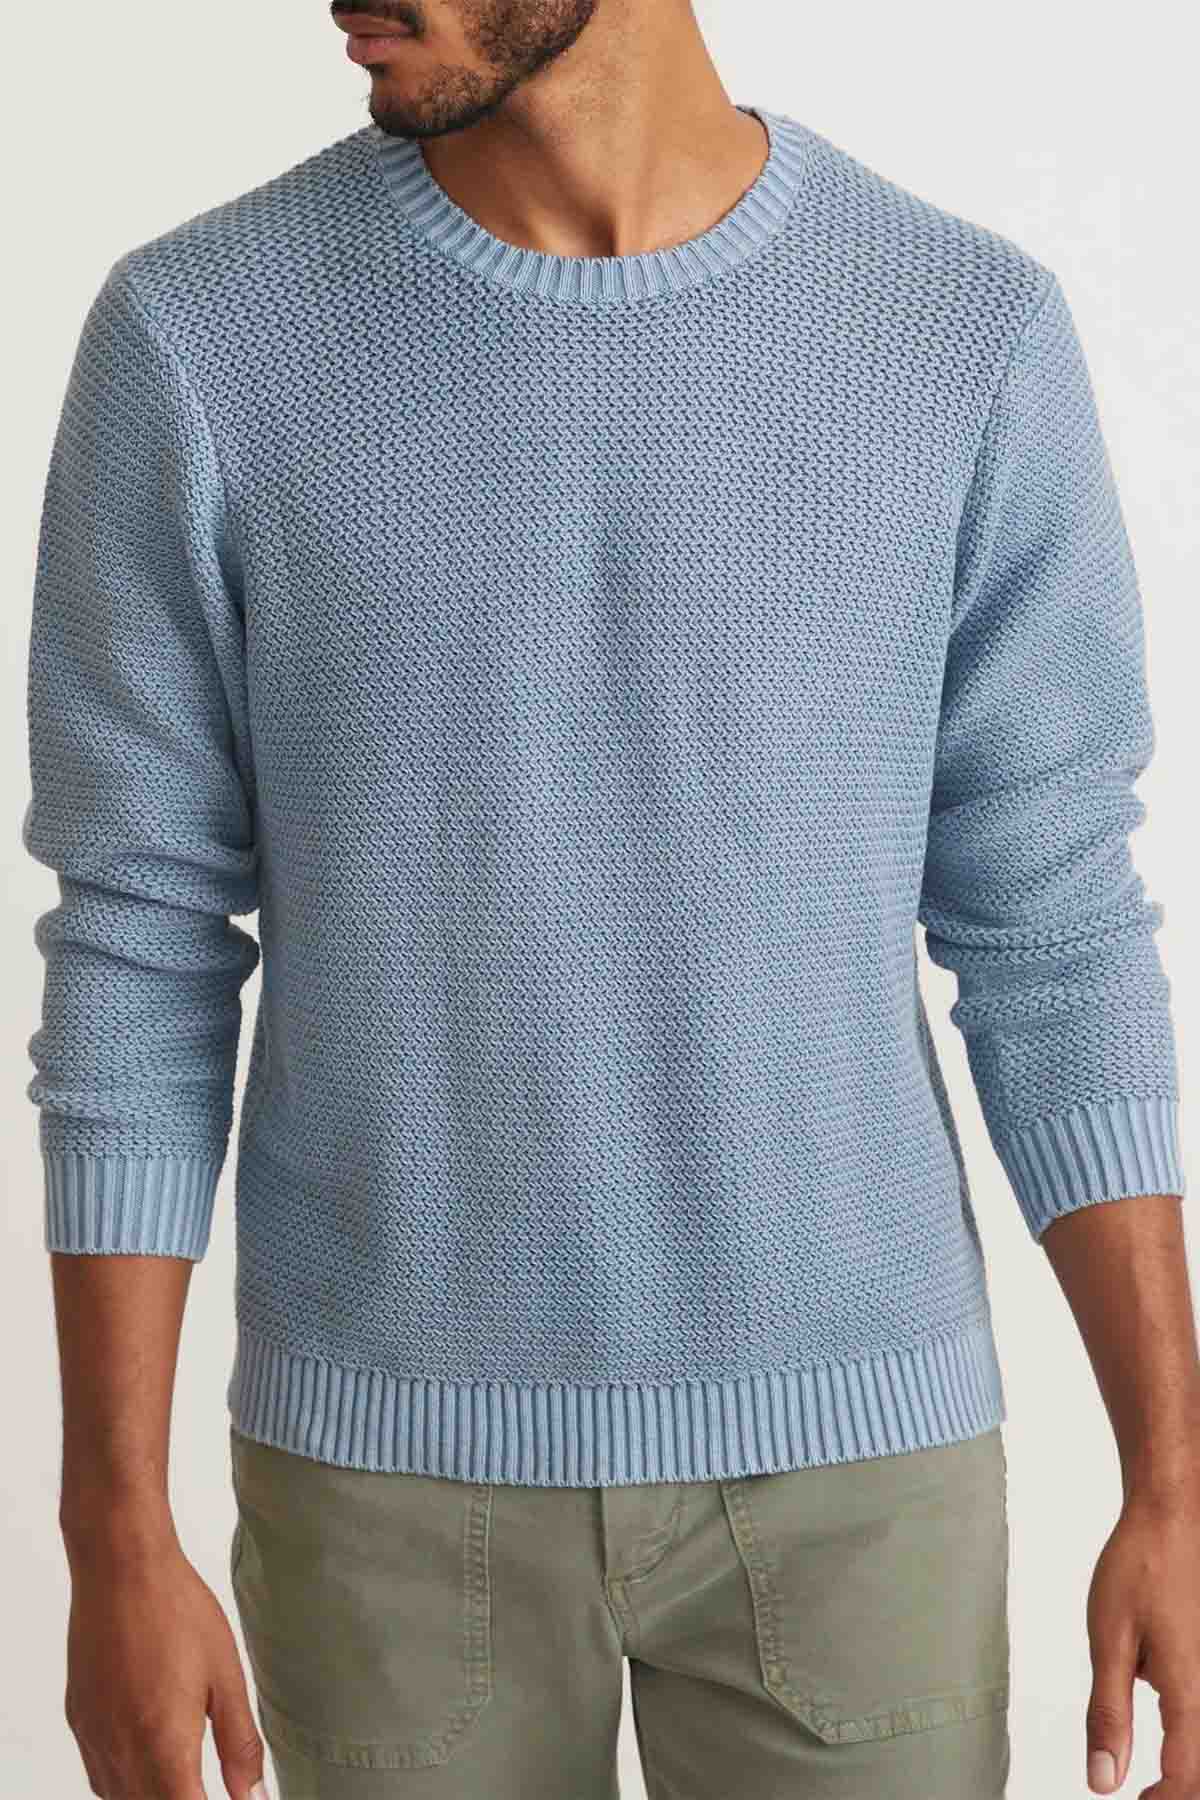 Marine Layer - Garment Dye Crew Sweater - Coronet Blue - Front